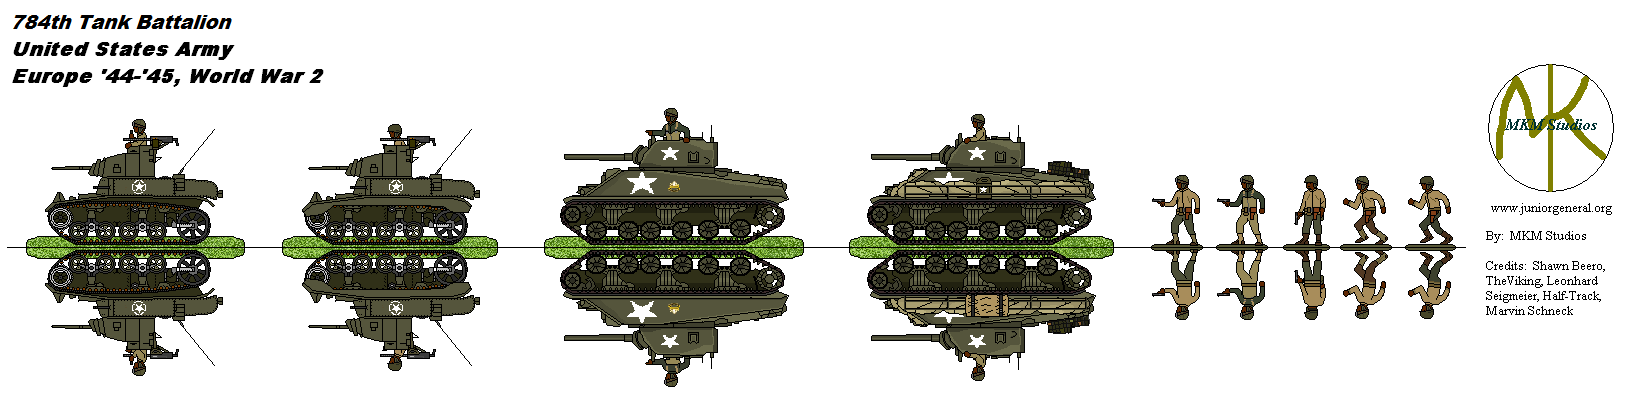 Tank Battalion (784th)